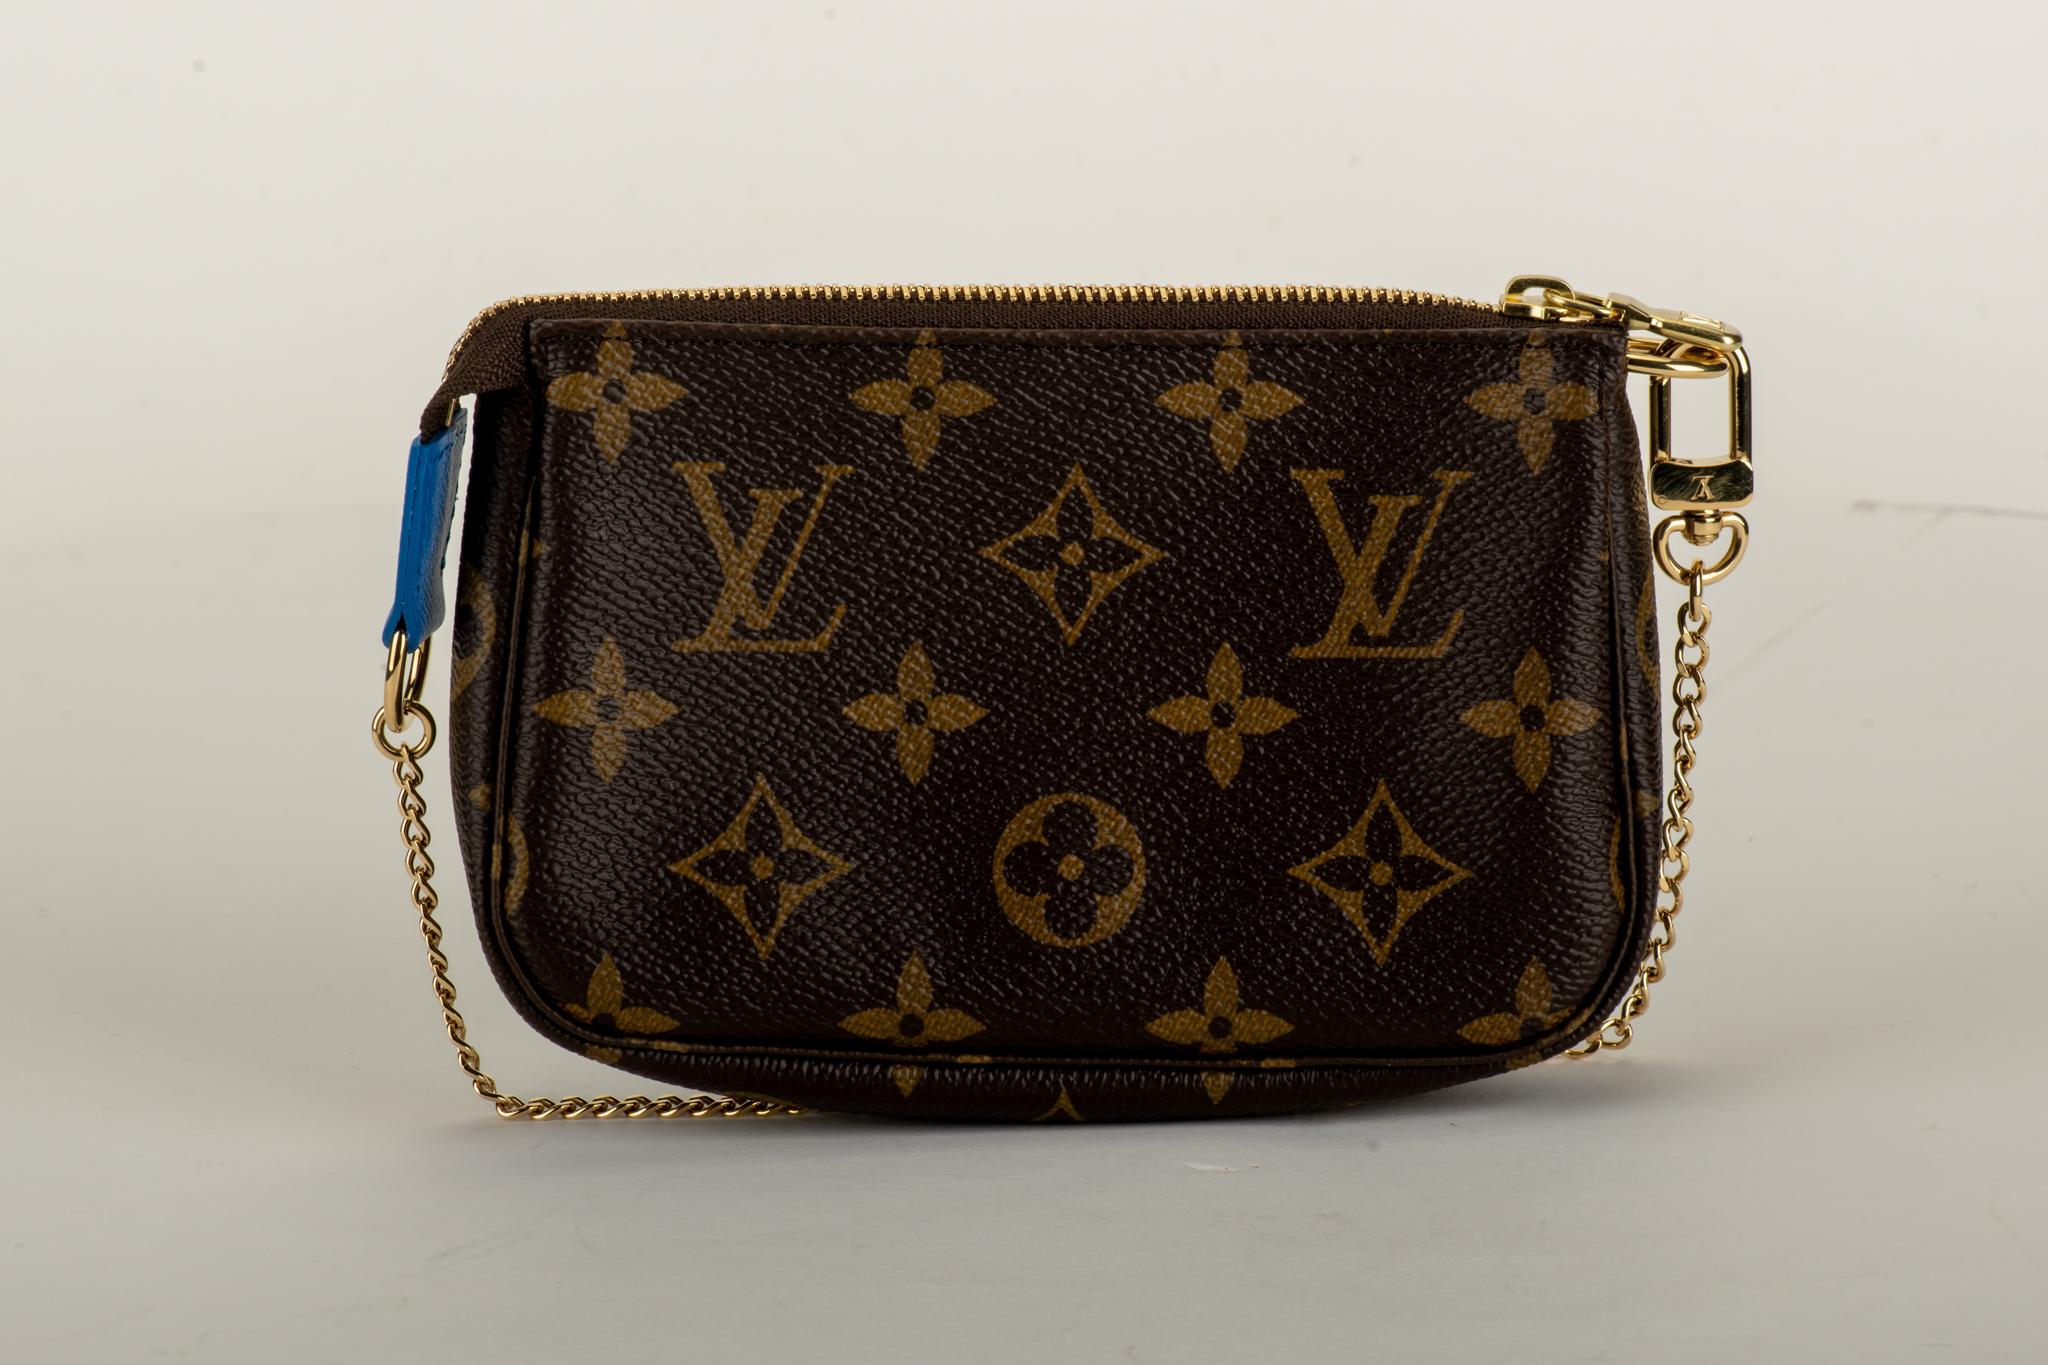 Black New in Box Louis Vuitton Limited Edition Christmas Venice Pouchette bag